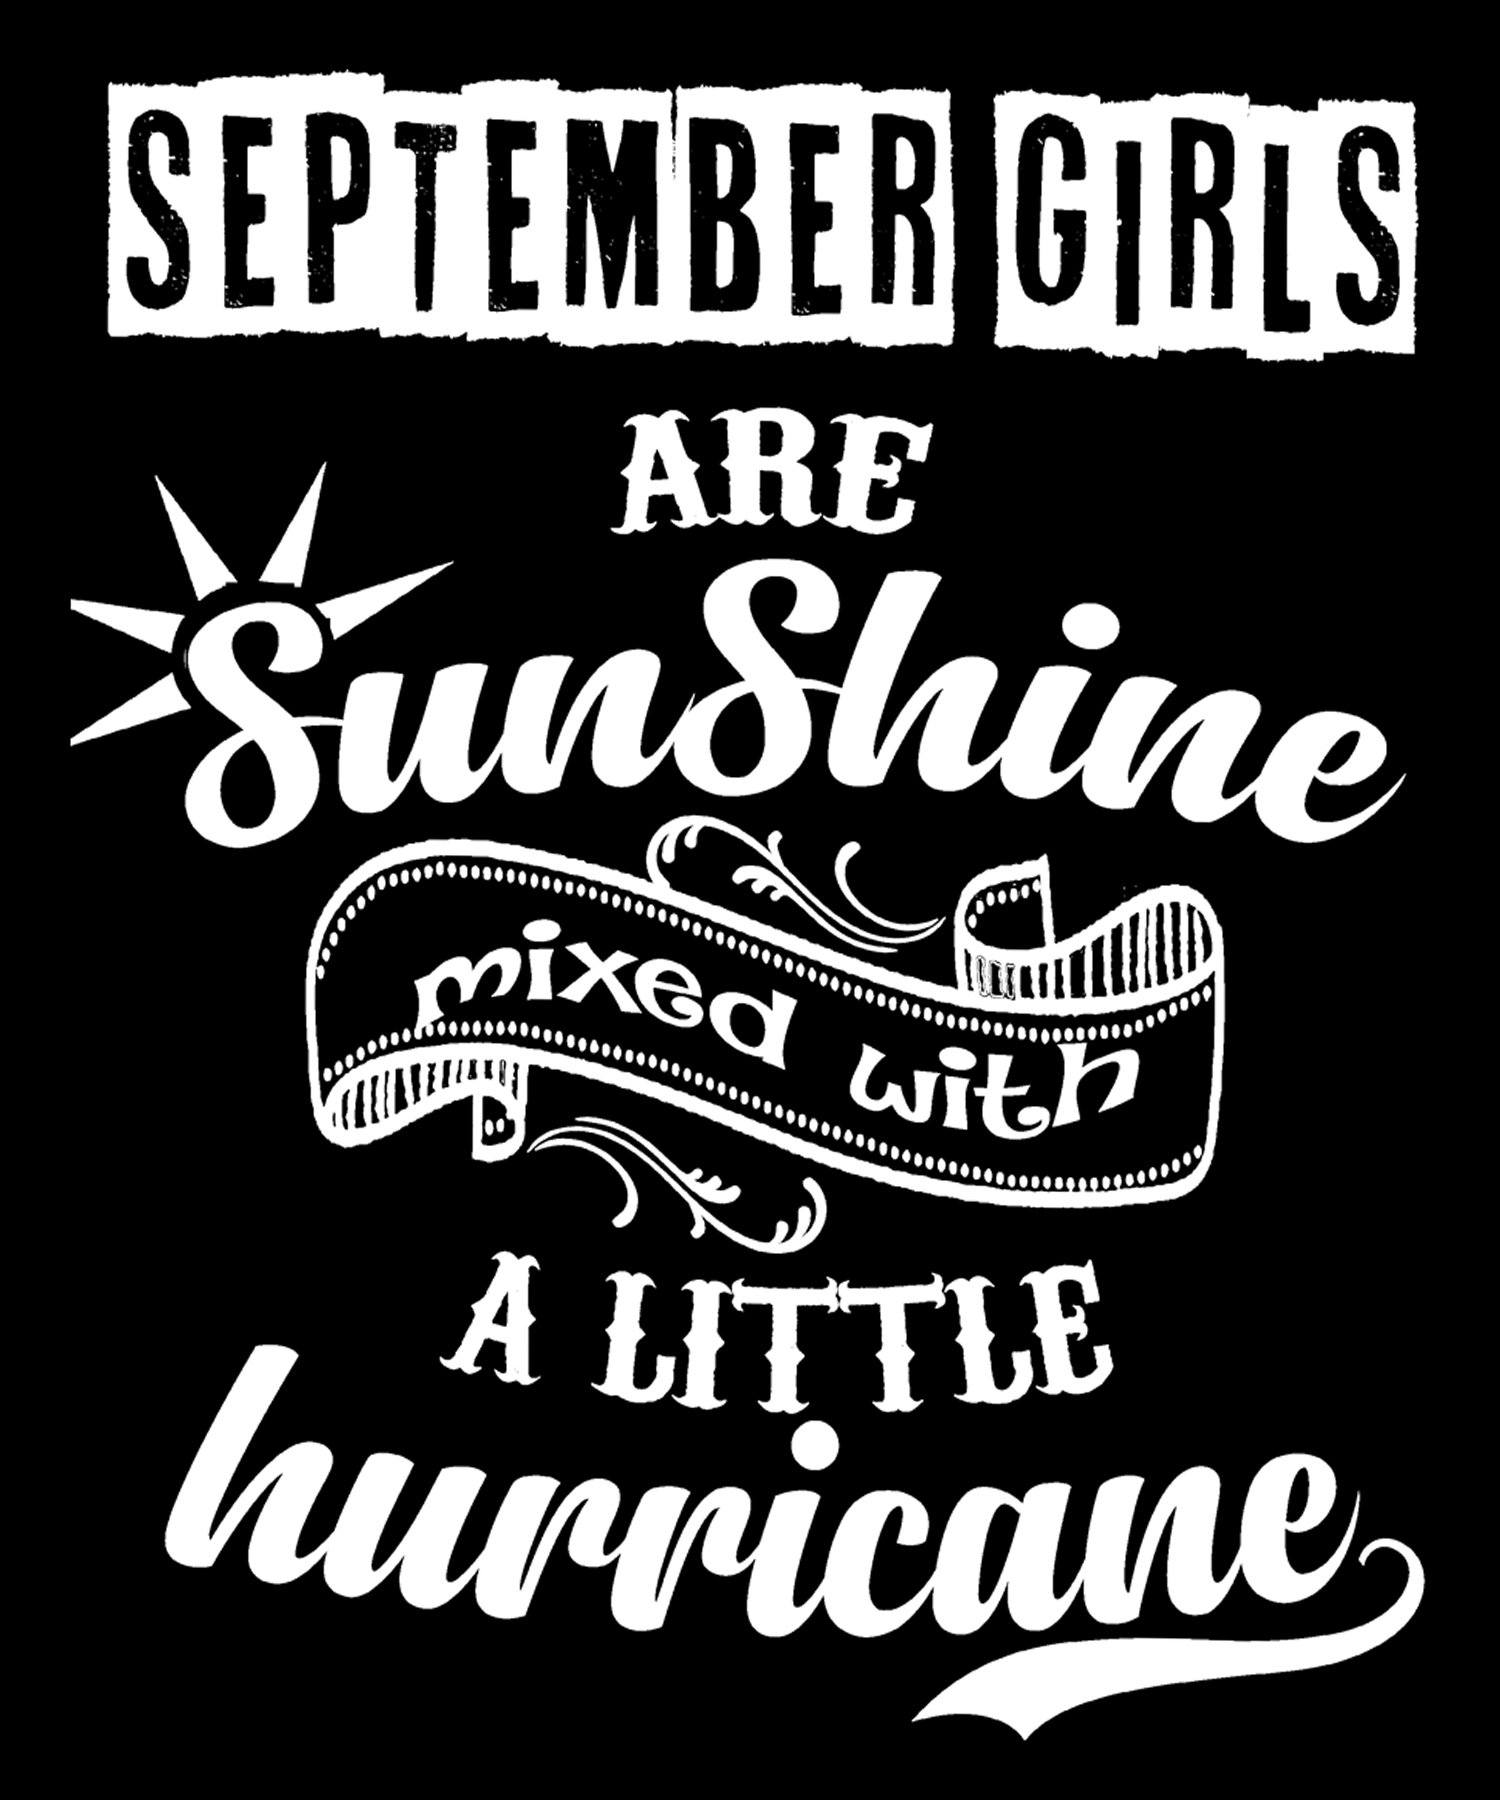 "September Girls Are Sunshine Mixed With Hurricane"